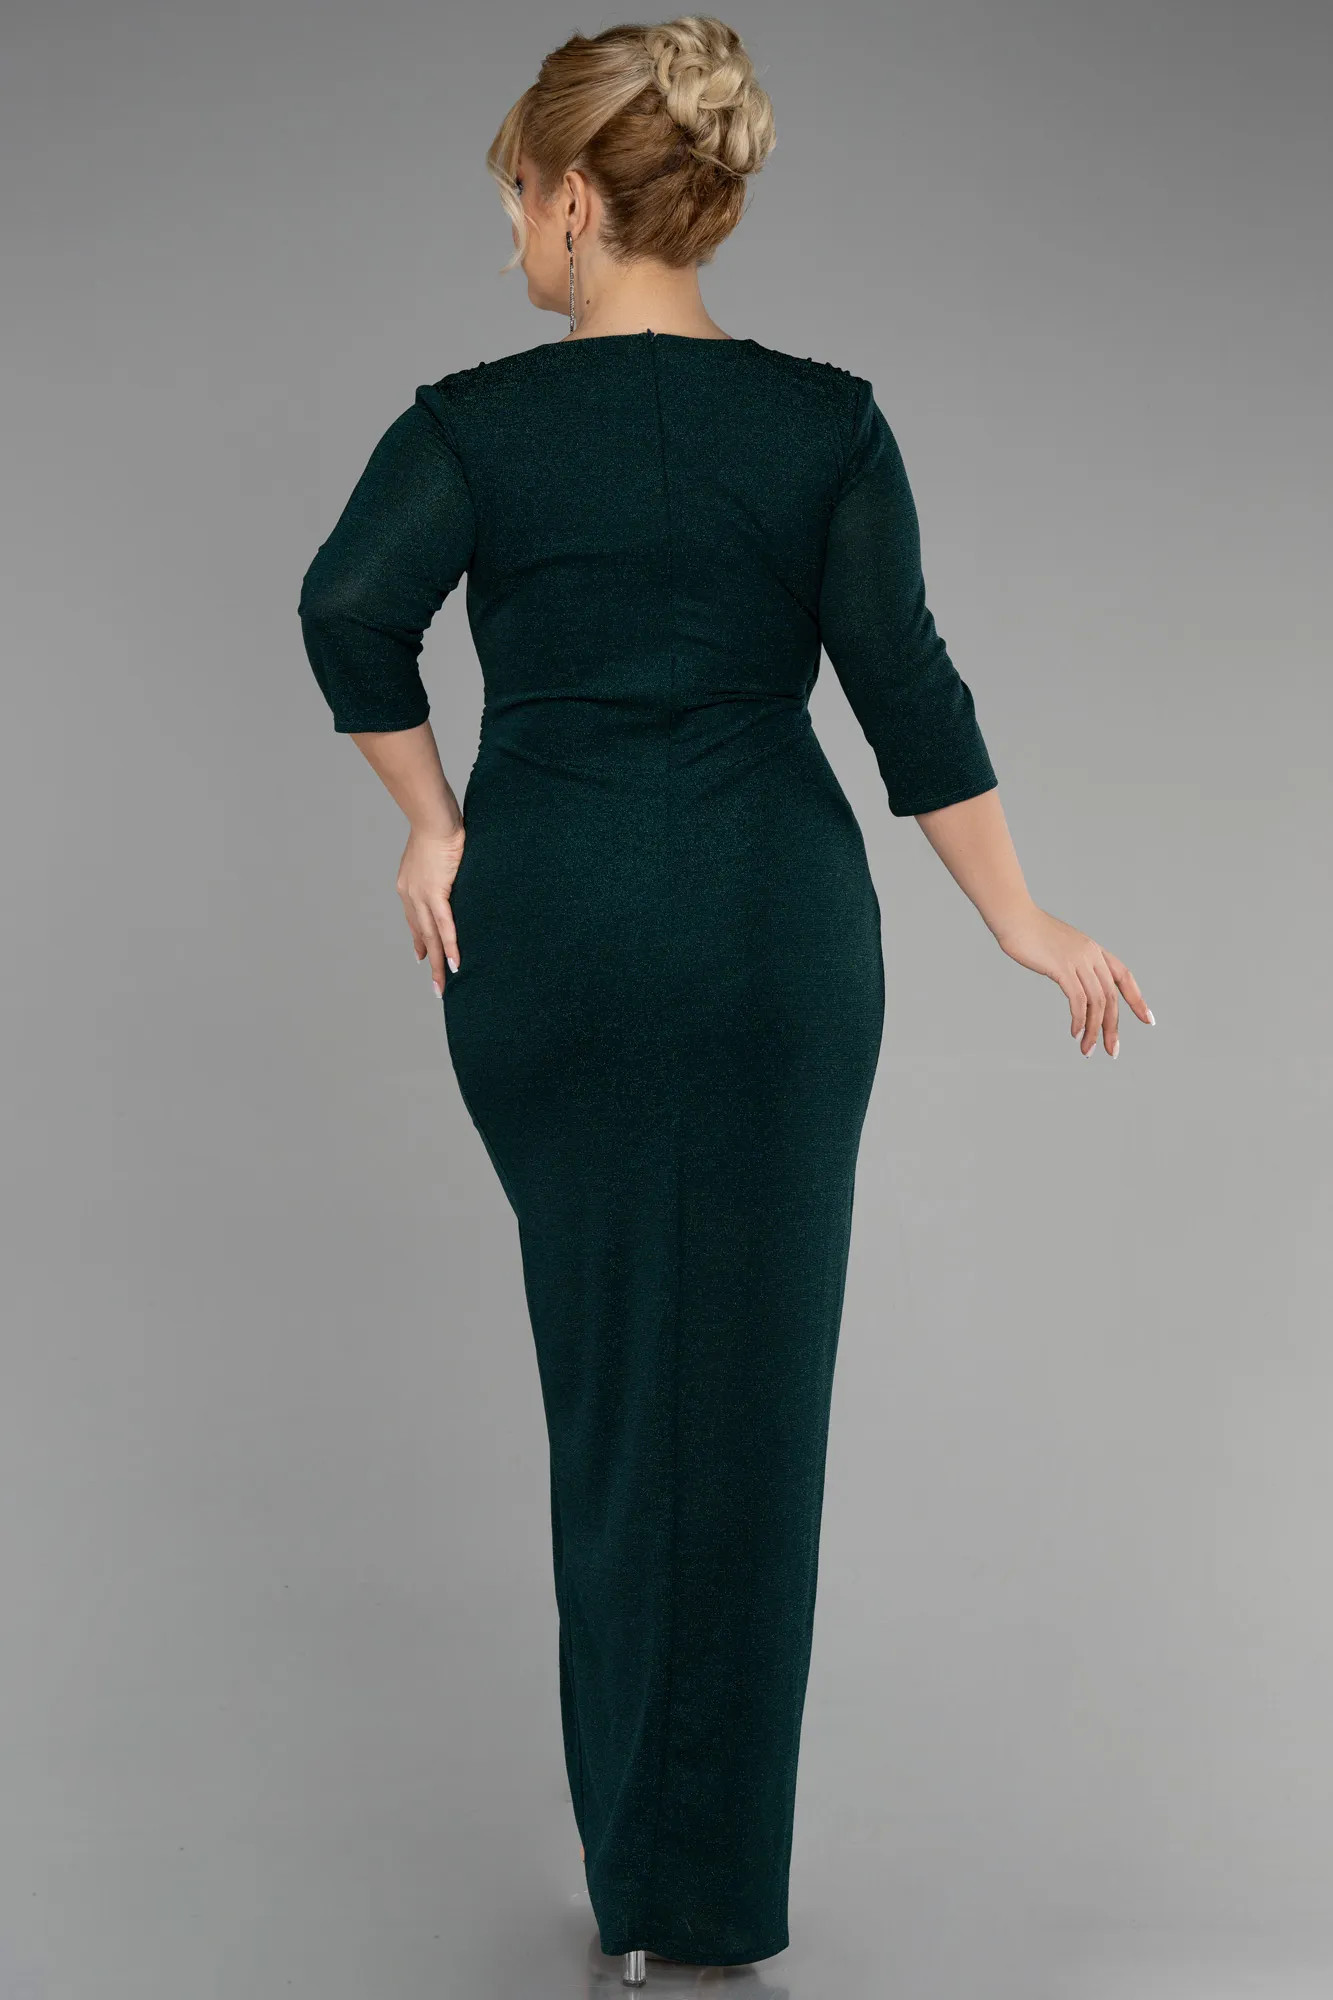 Emerald Green-Long Plus Size Evening Dress ABU3468